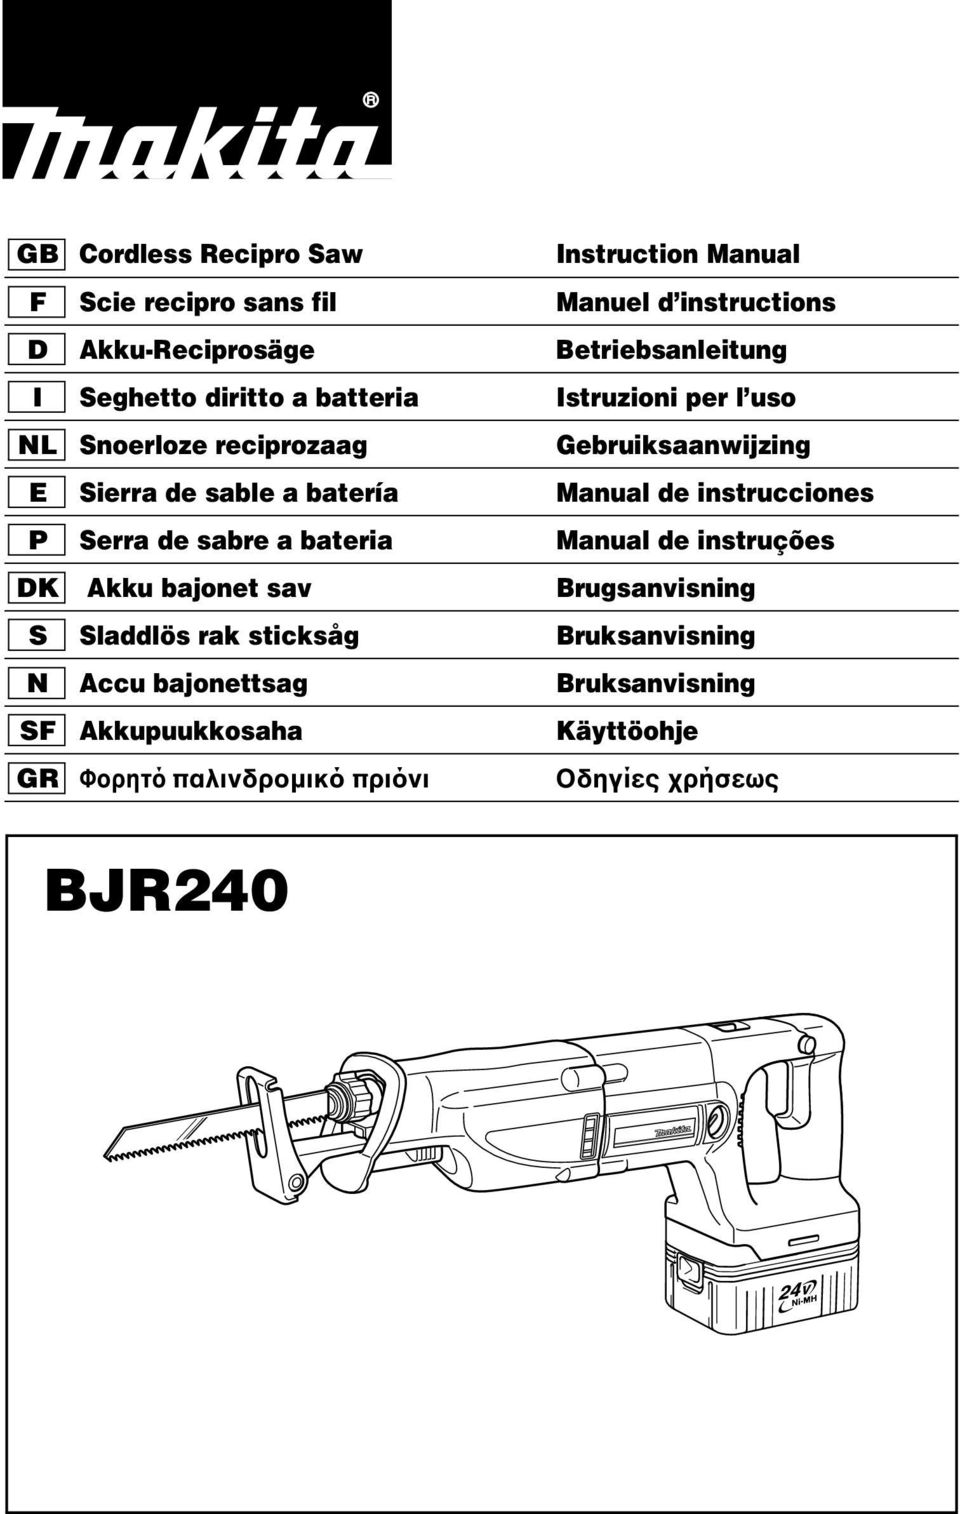 de instrucciones P Serra de sabre a bateria Manual de instruções DK Akku bajonet sav Brugsanvisning S Sladdlös rak sticksåg